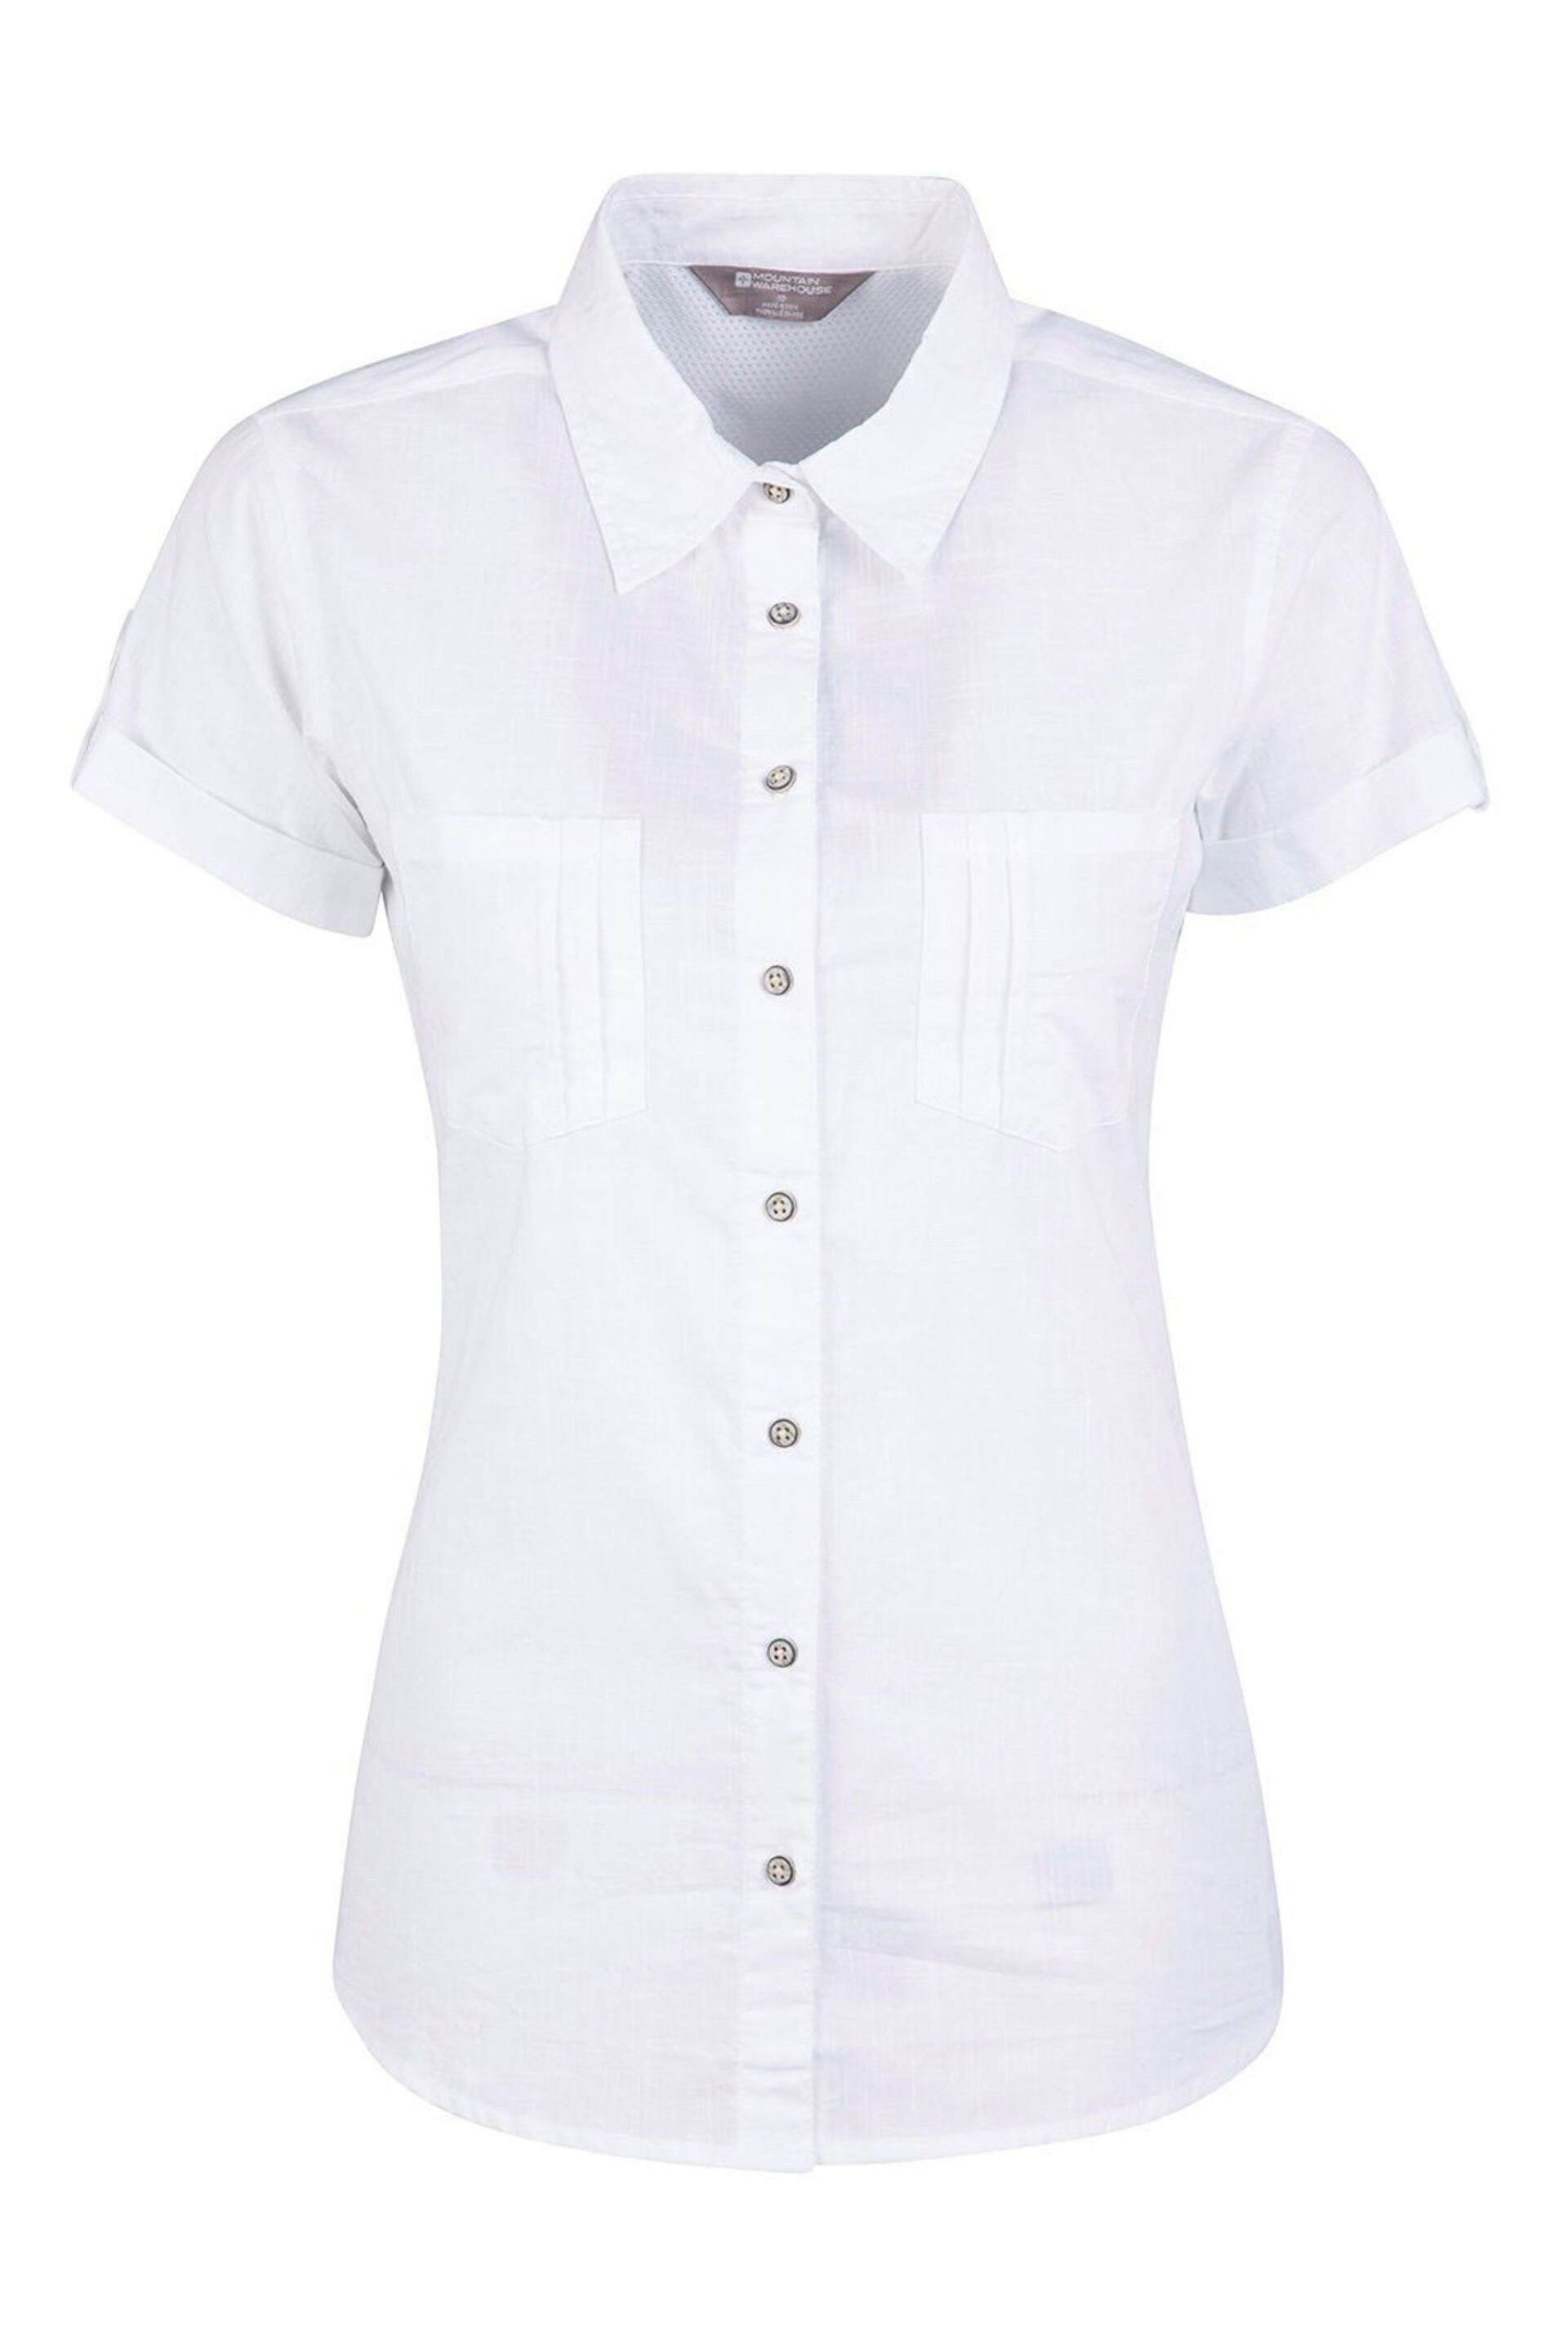 Mountain Warehouse White Coconut Short Sleeve Womens Shirt - Image 1 of 4